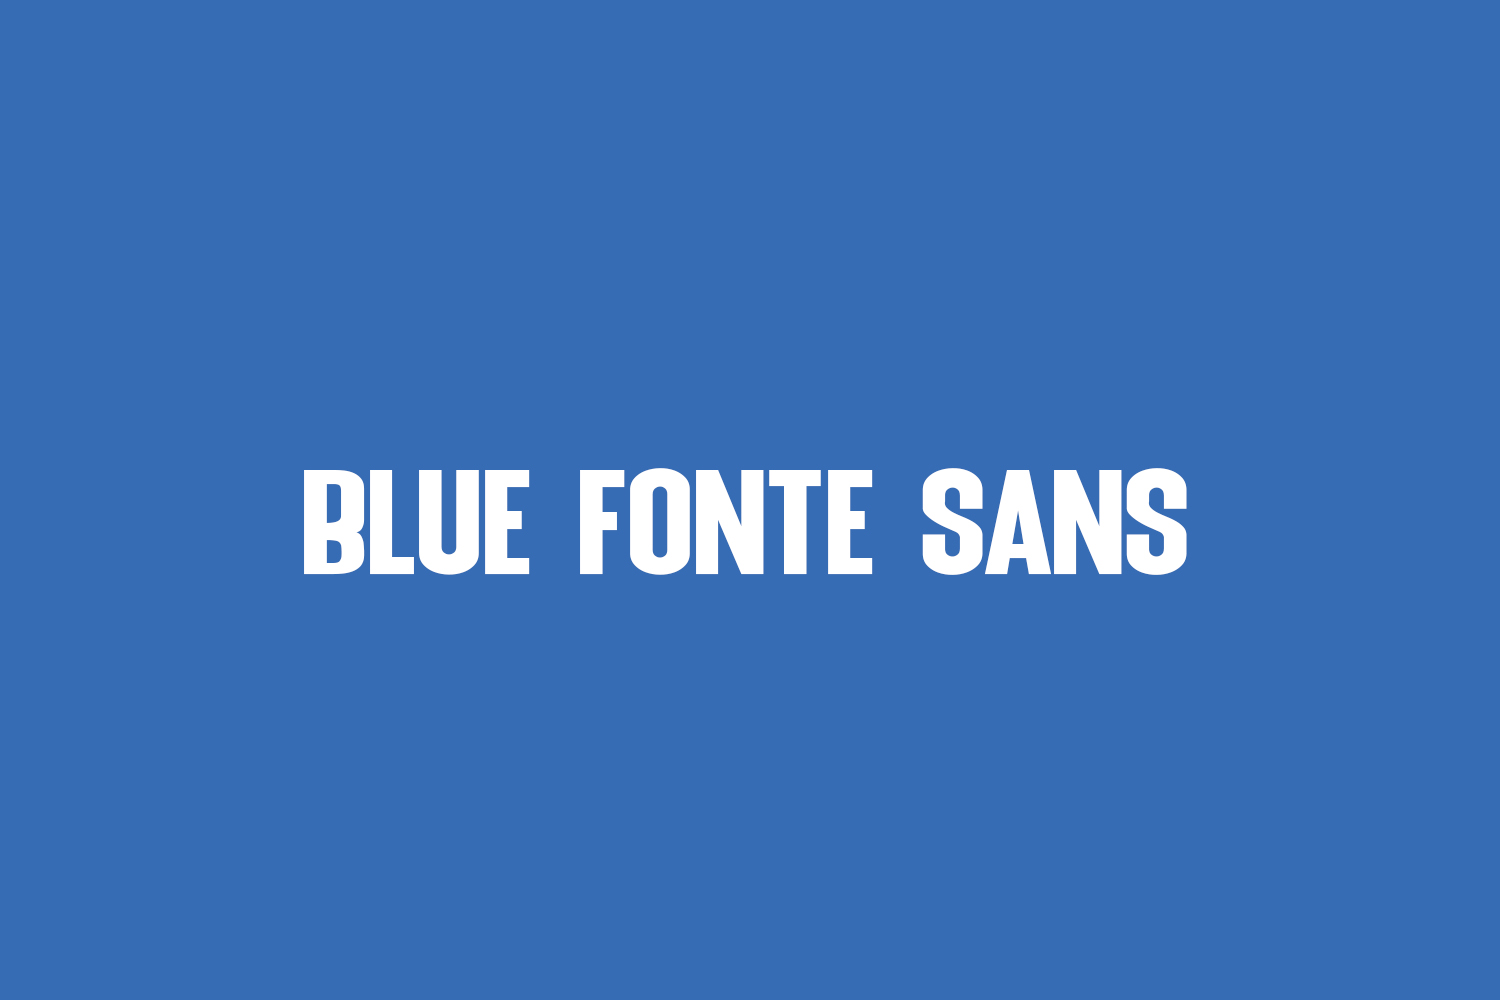 Blue Fonte Sans Free Font